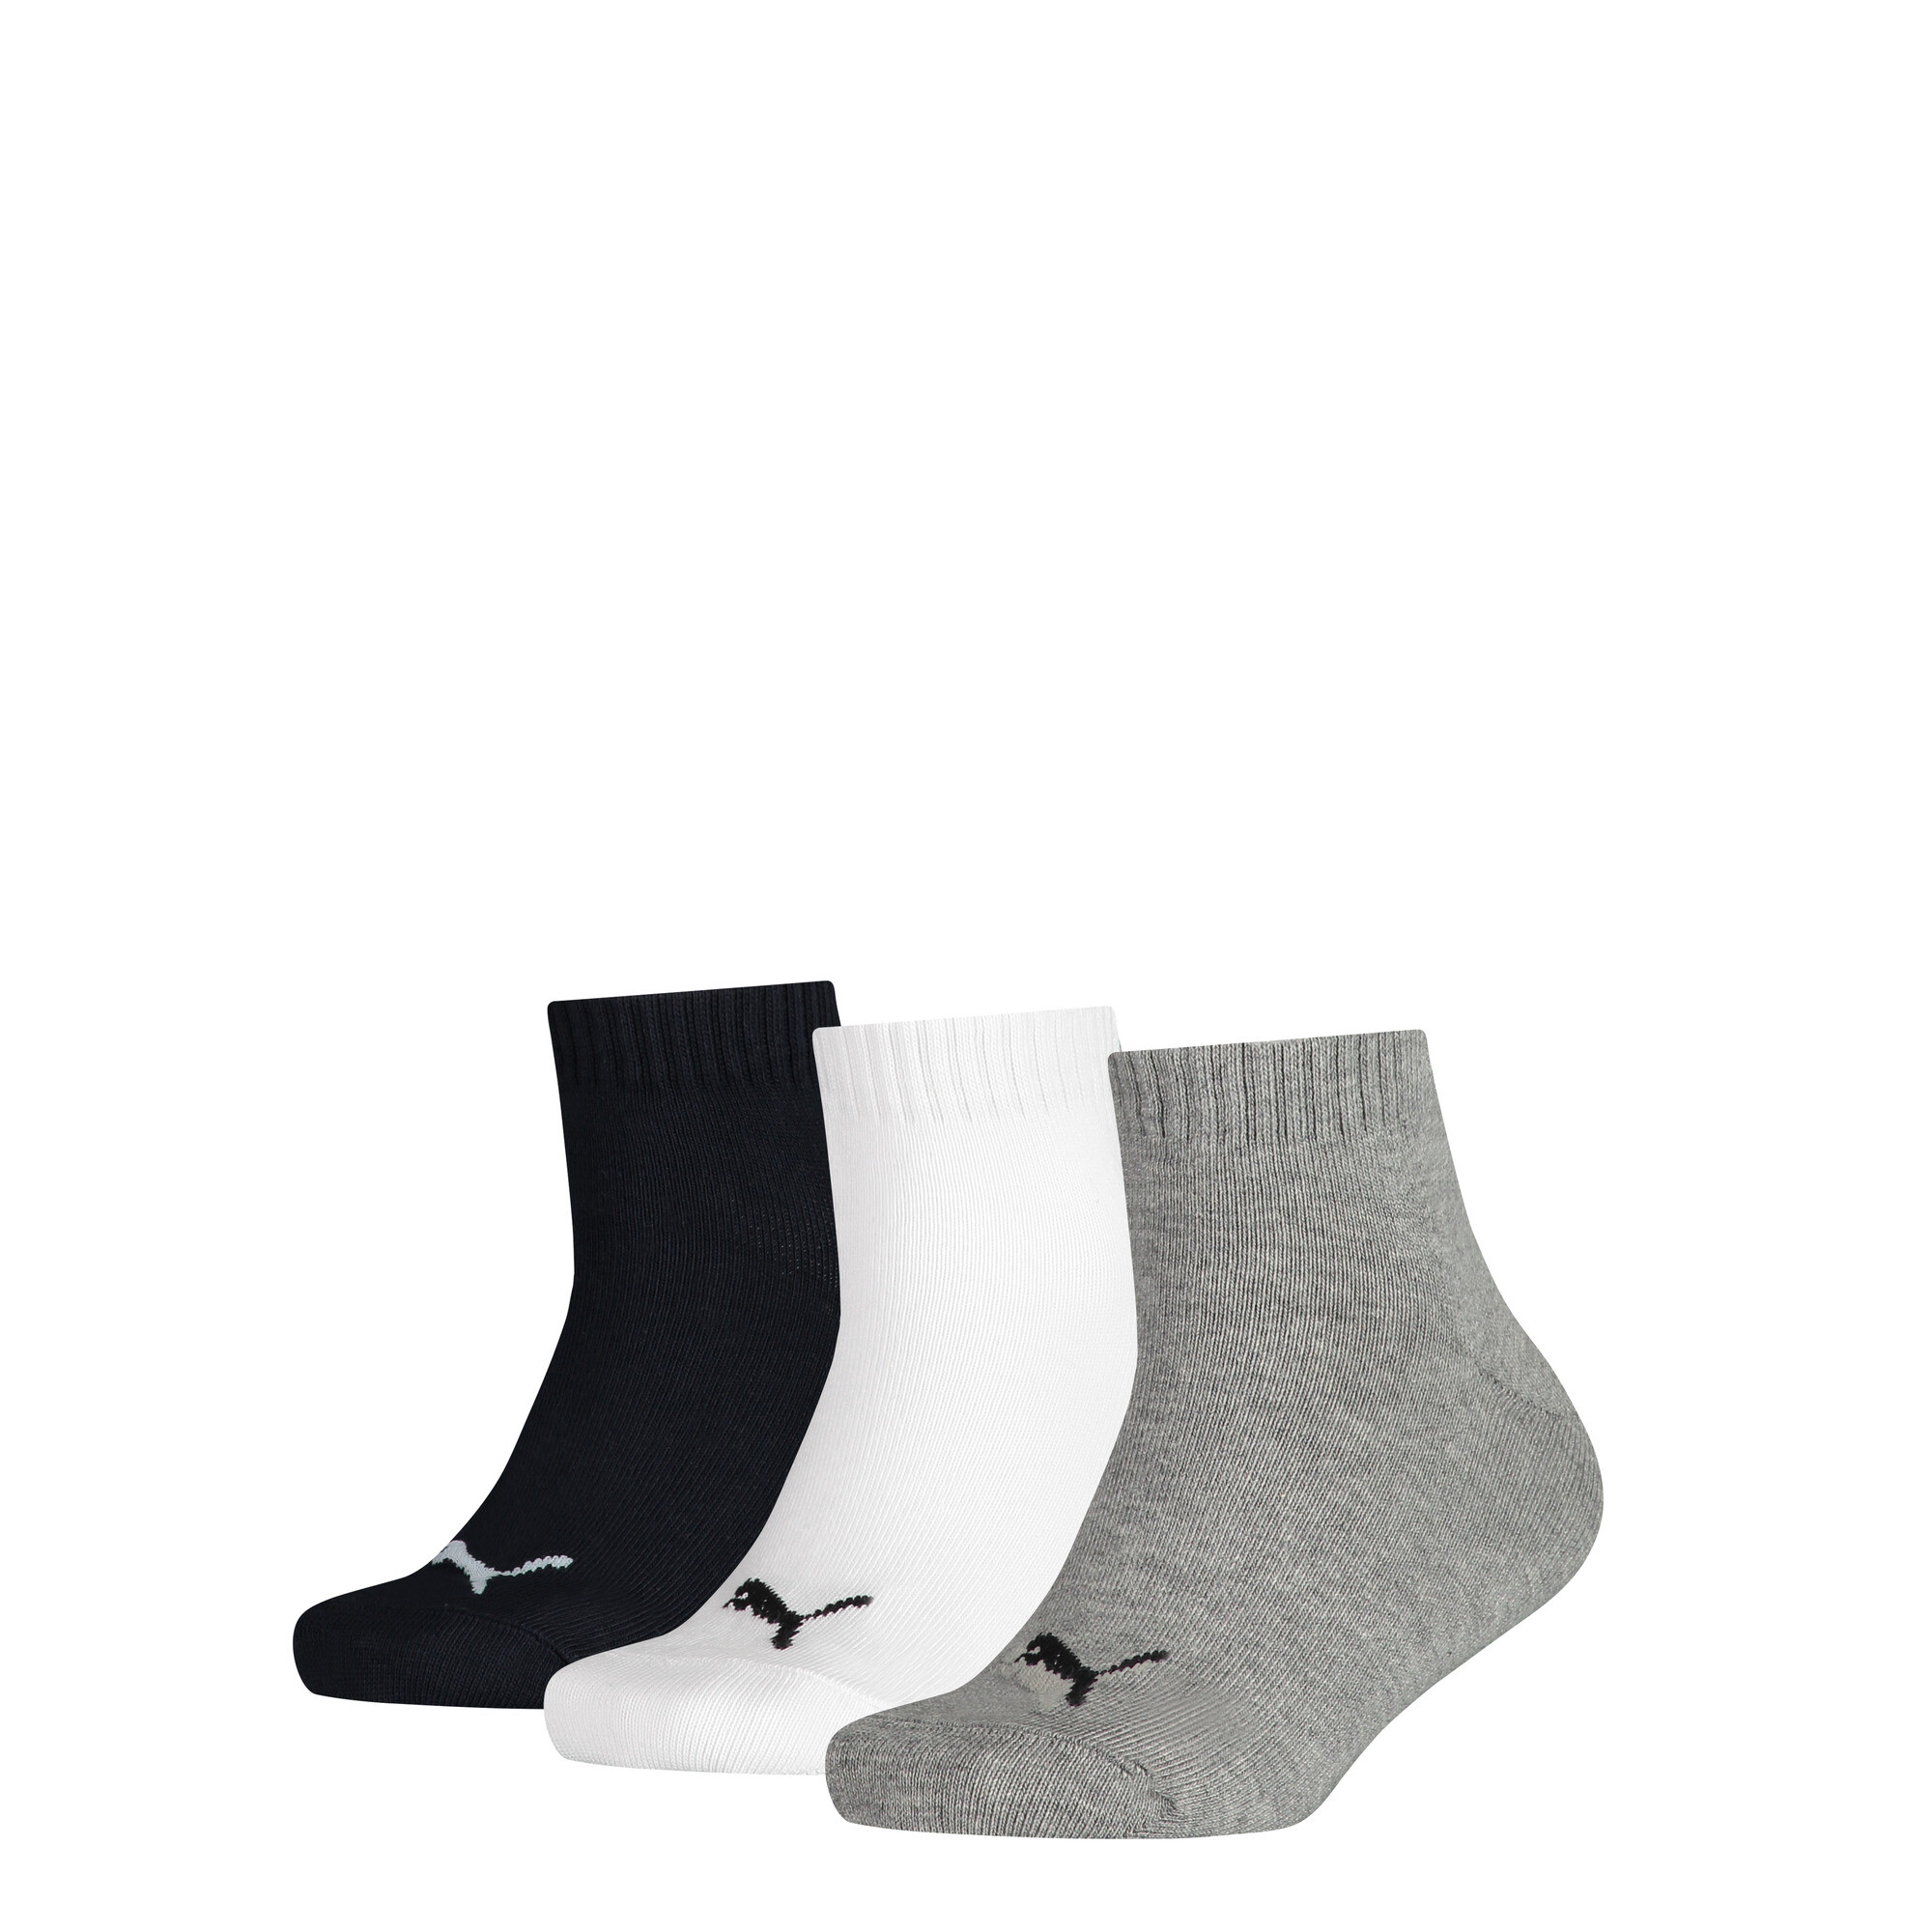 Kids' PUMA Quarter Socks 3 Pack In Grey/White/Black, Size 31-34